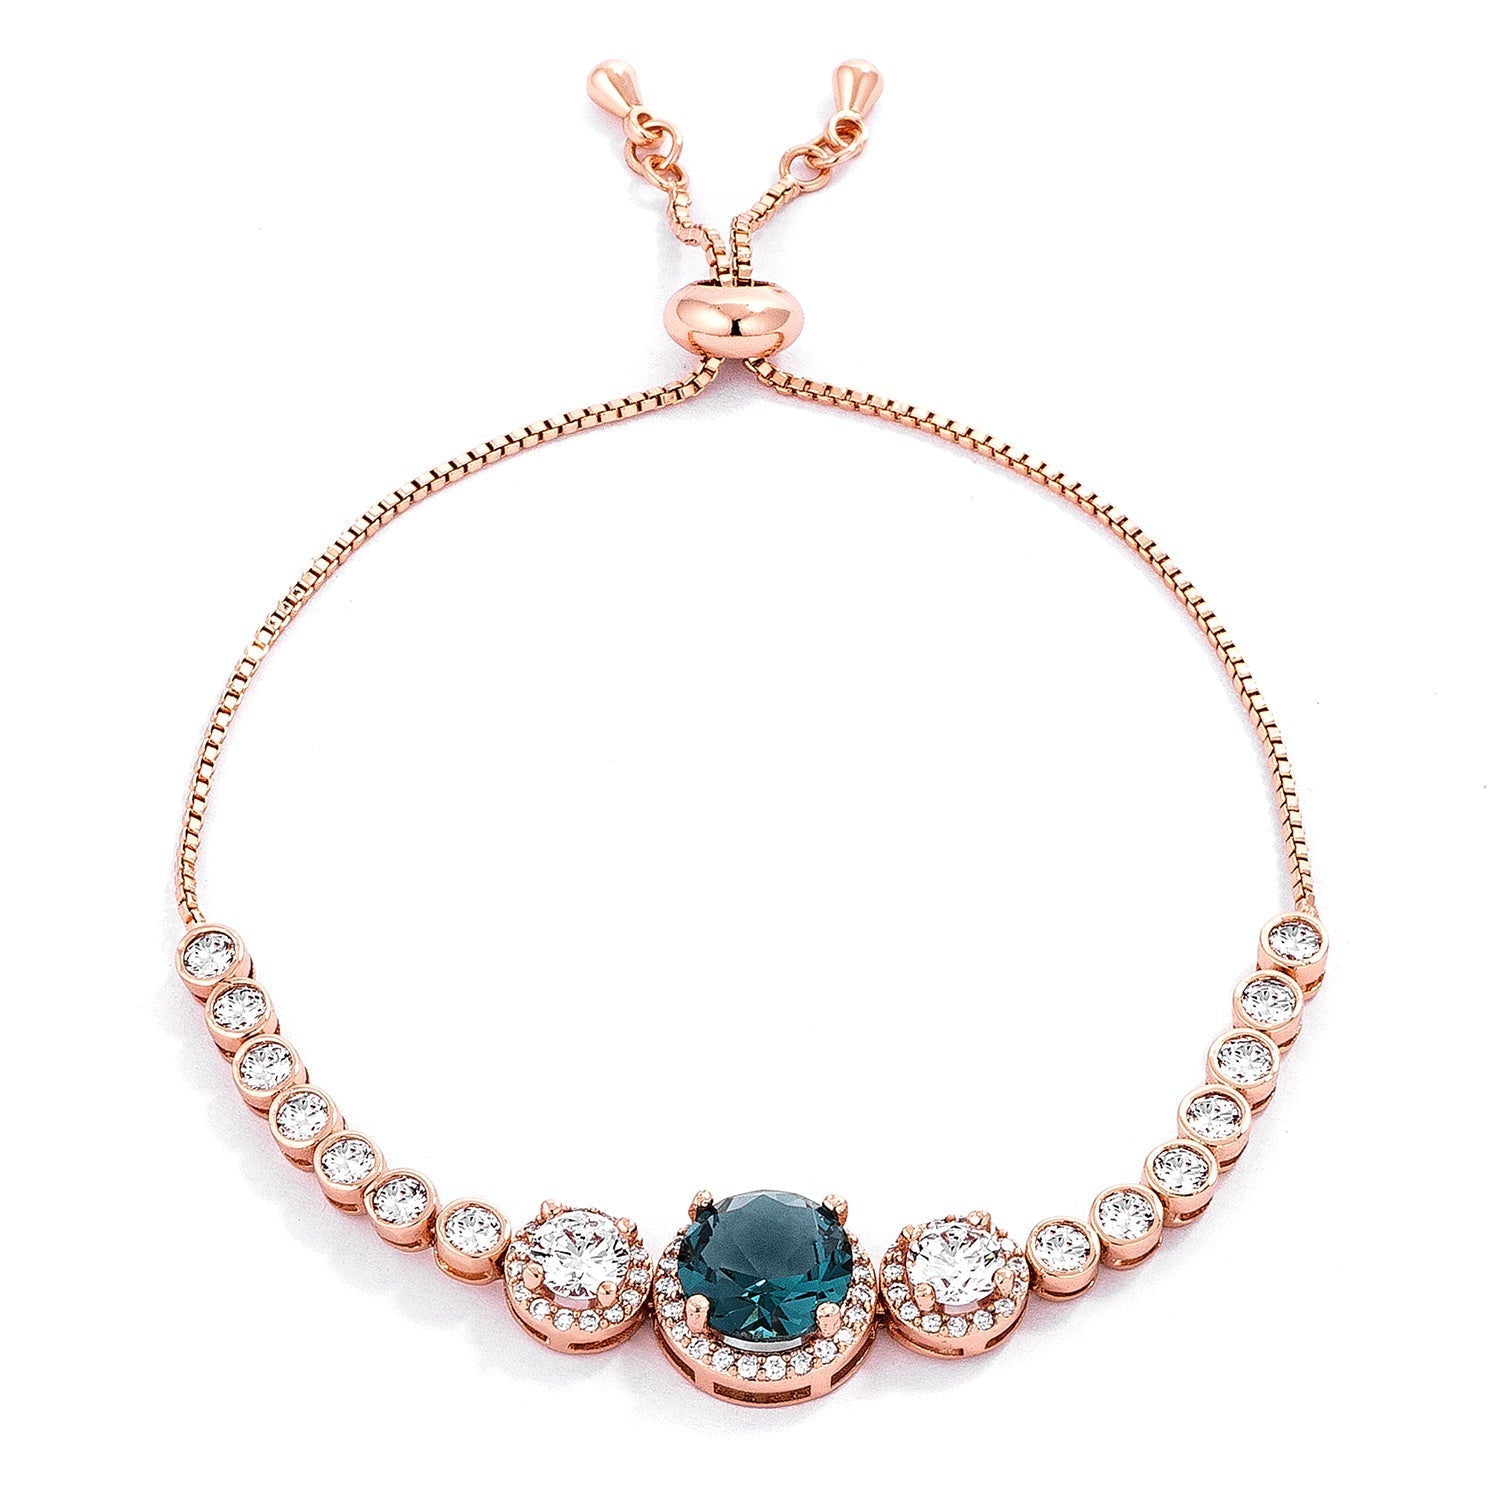 Adjustable Rose Gold Plated Graduated CZ Bolo Style Tennis Bracelet - LinkagejewelrydesignLinkagejewelrydesign